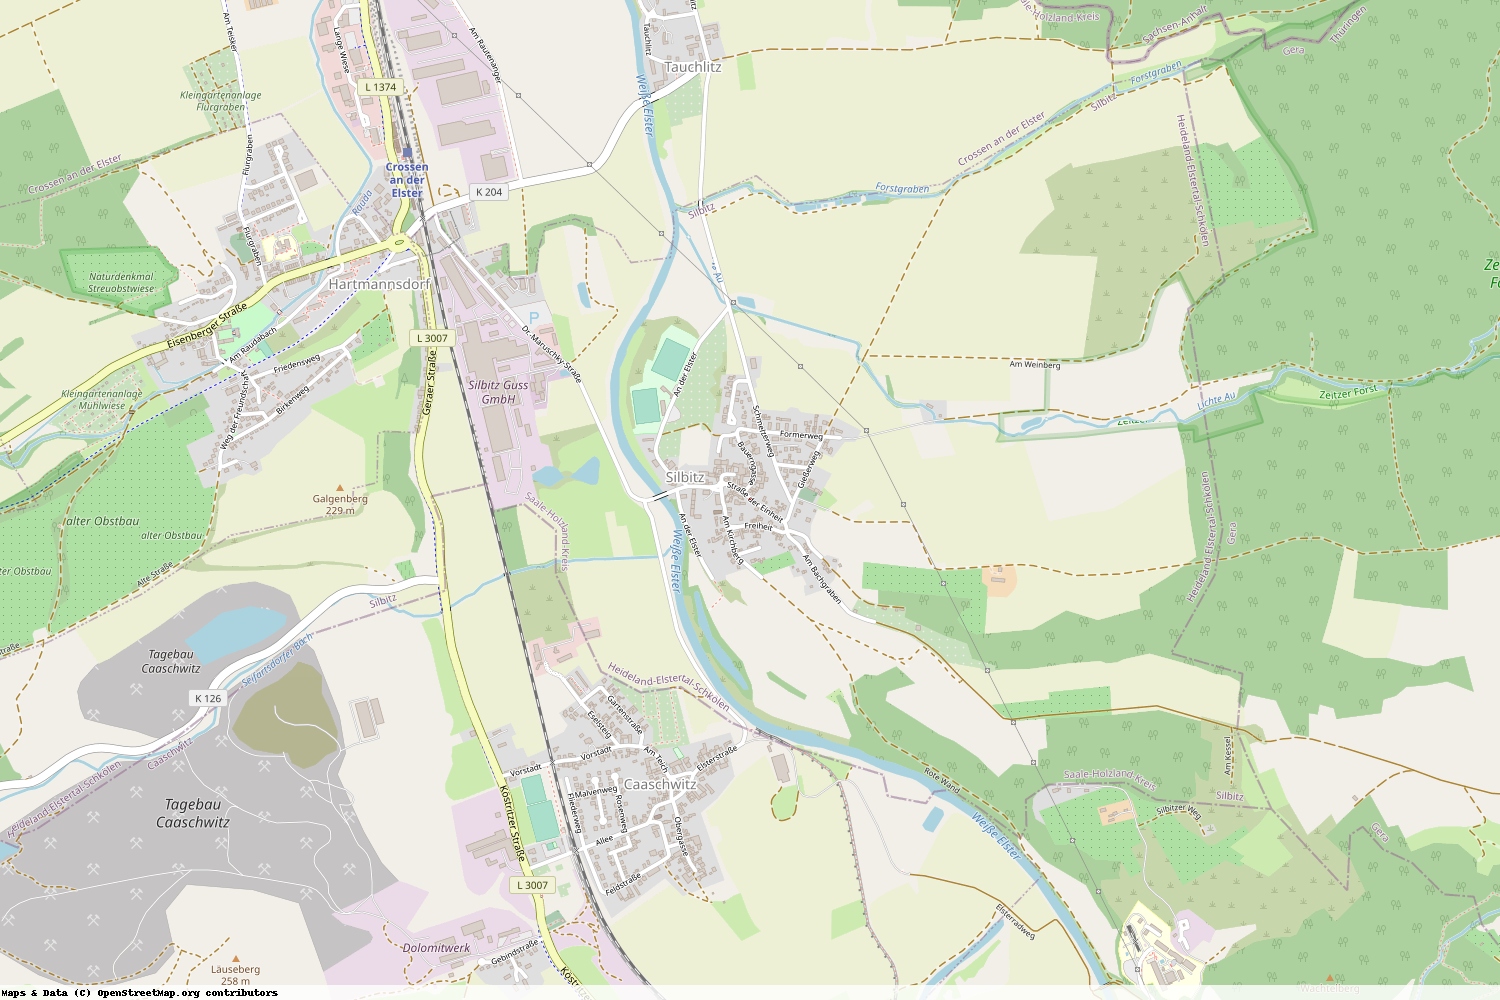 Ist gerade Stromausfall in Thüringen - Saale-Holzland-Kreis - Silbitz?